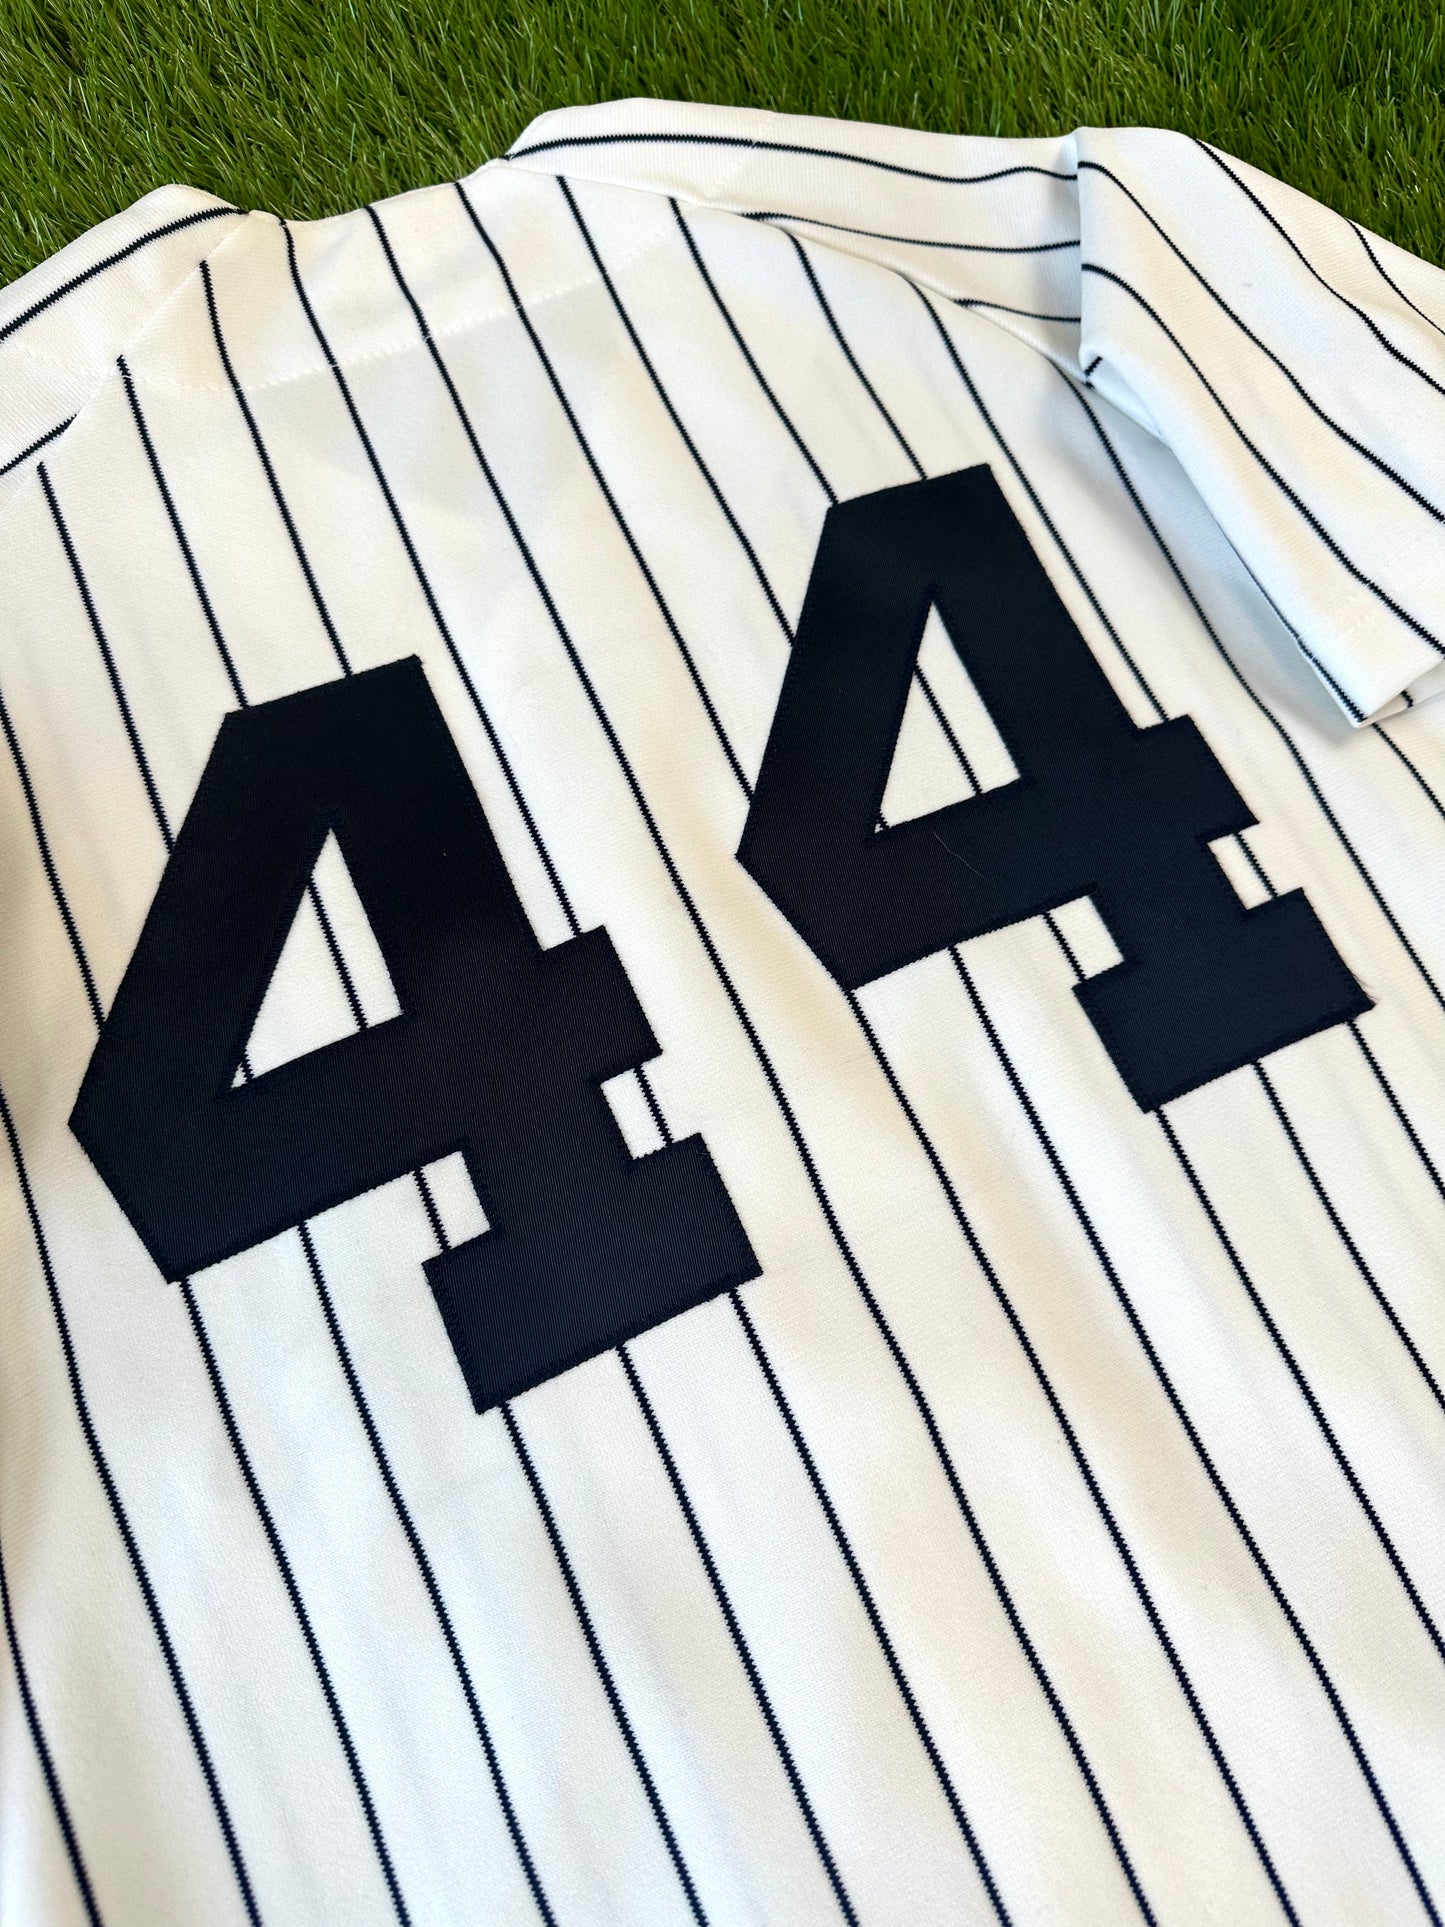 New York Yankees 1977-1979 Reggie Jackson MLB Baseball Jersey (38/Small)